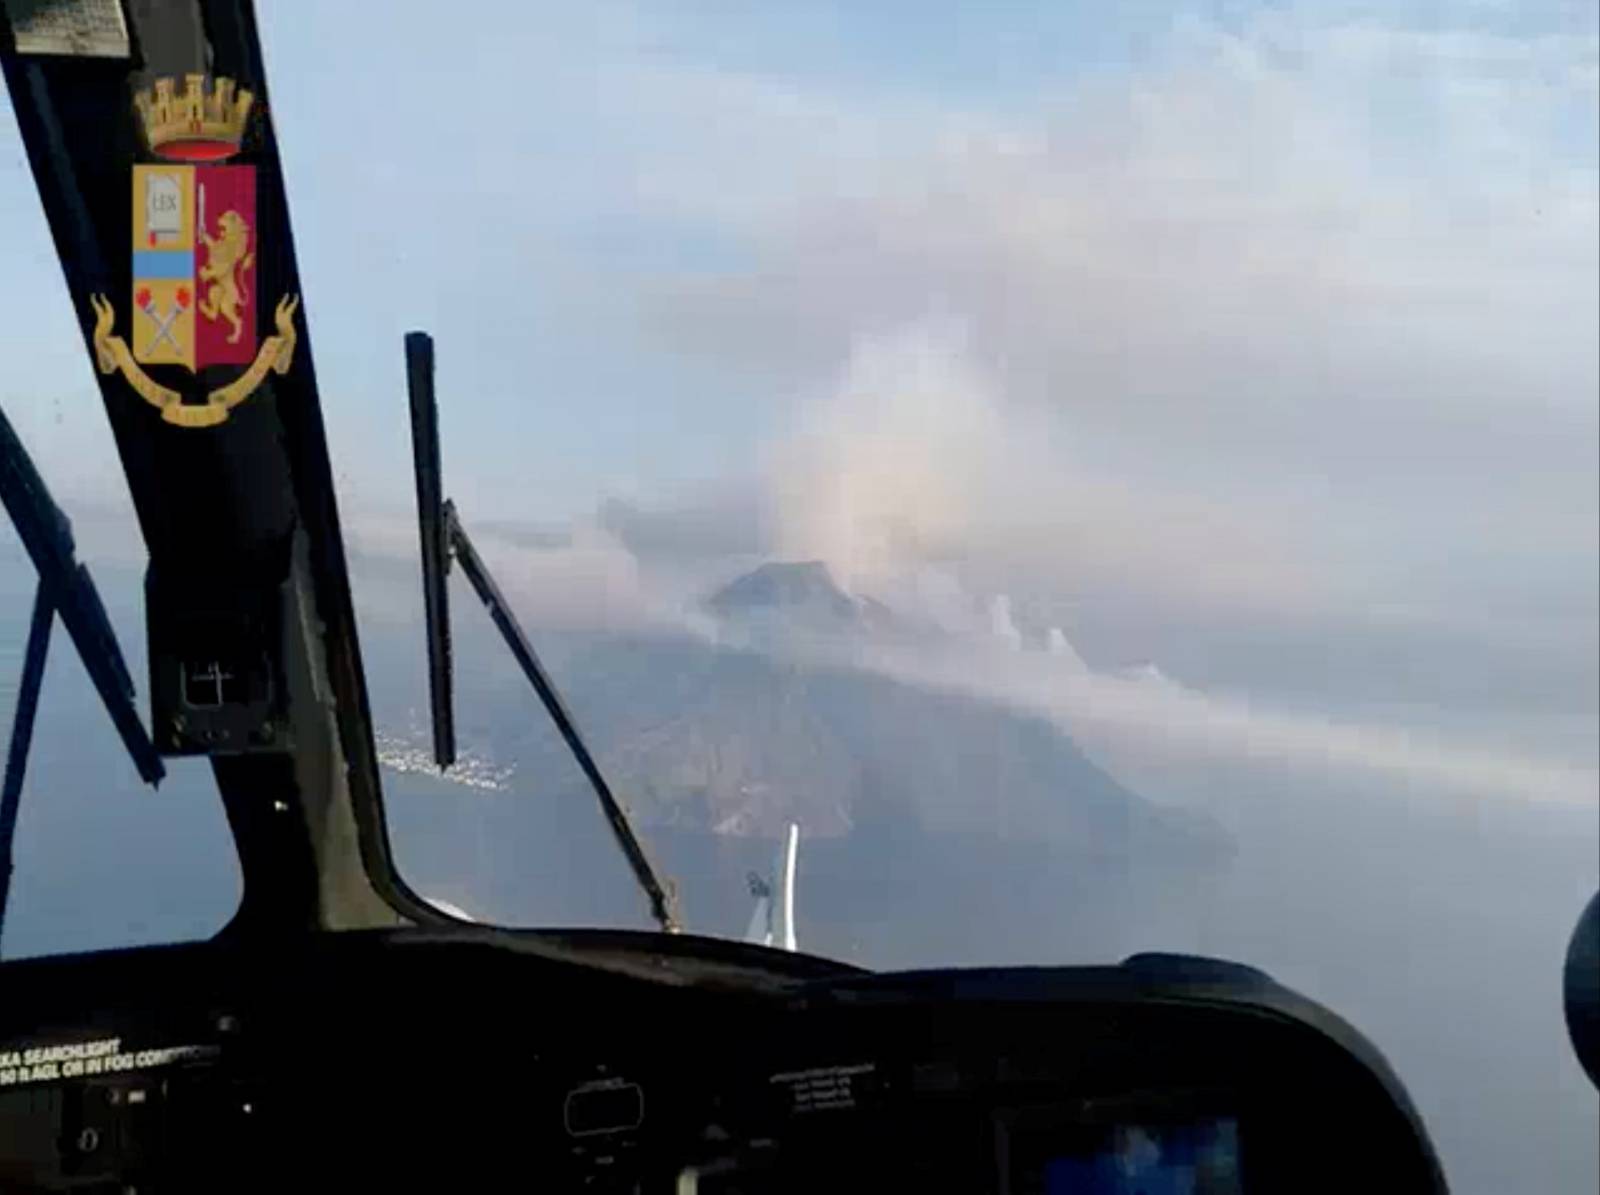 Police chopper aerial still image of volcano after eruption over Stromboli